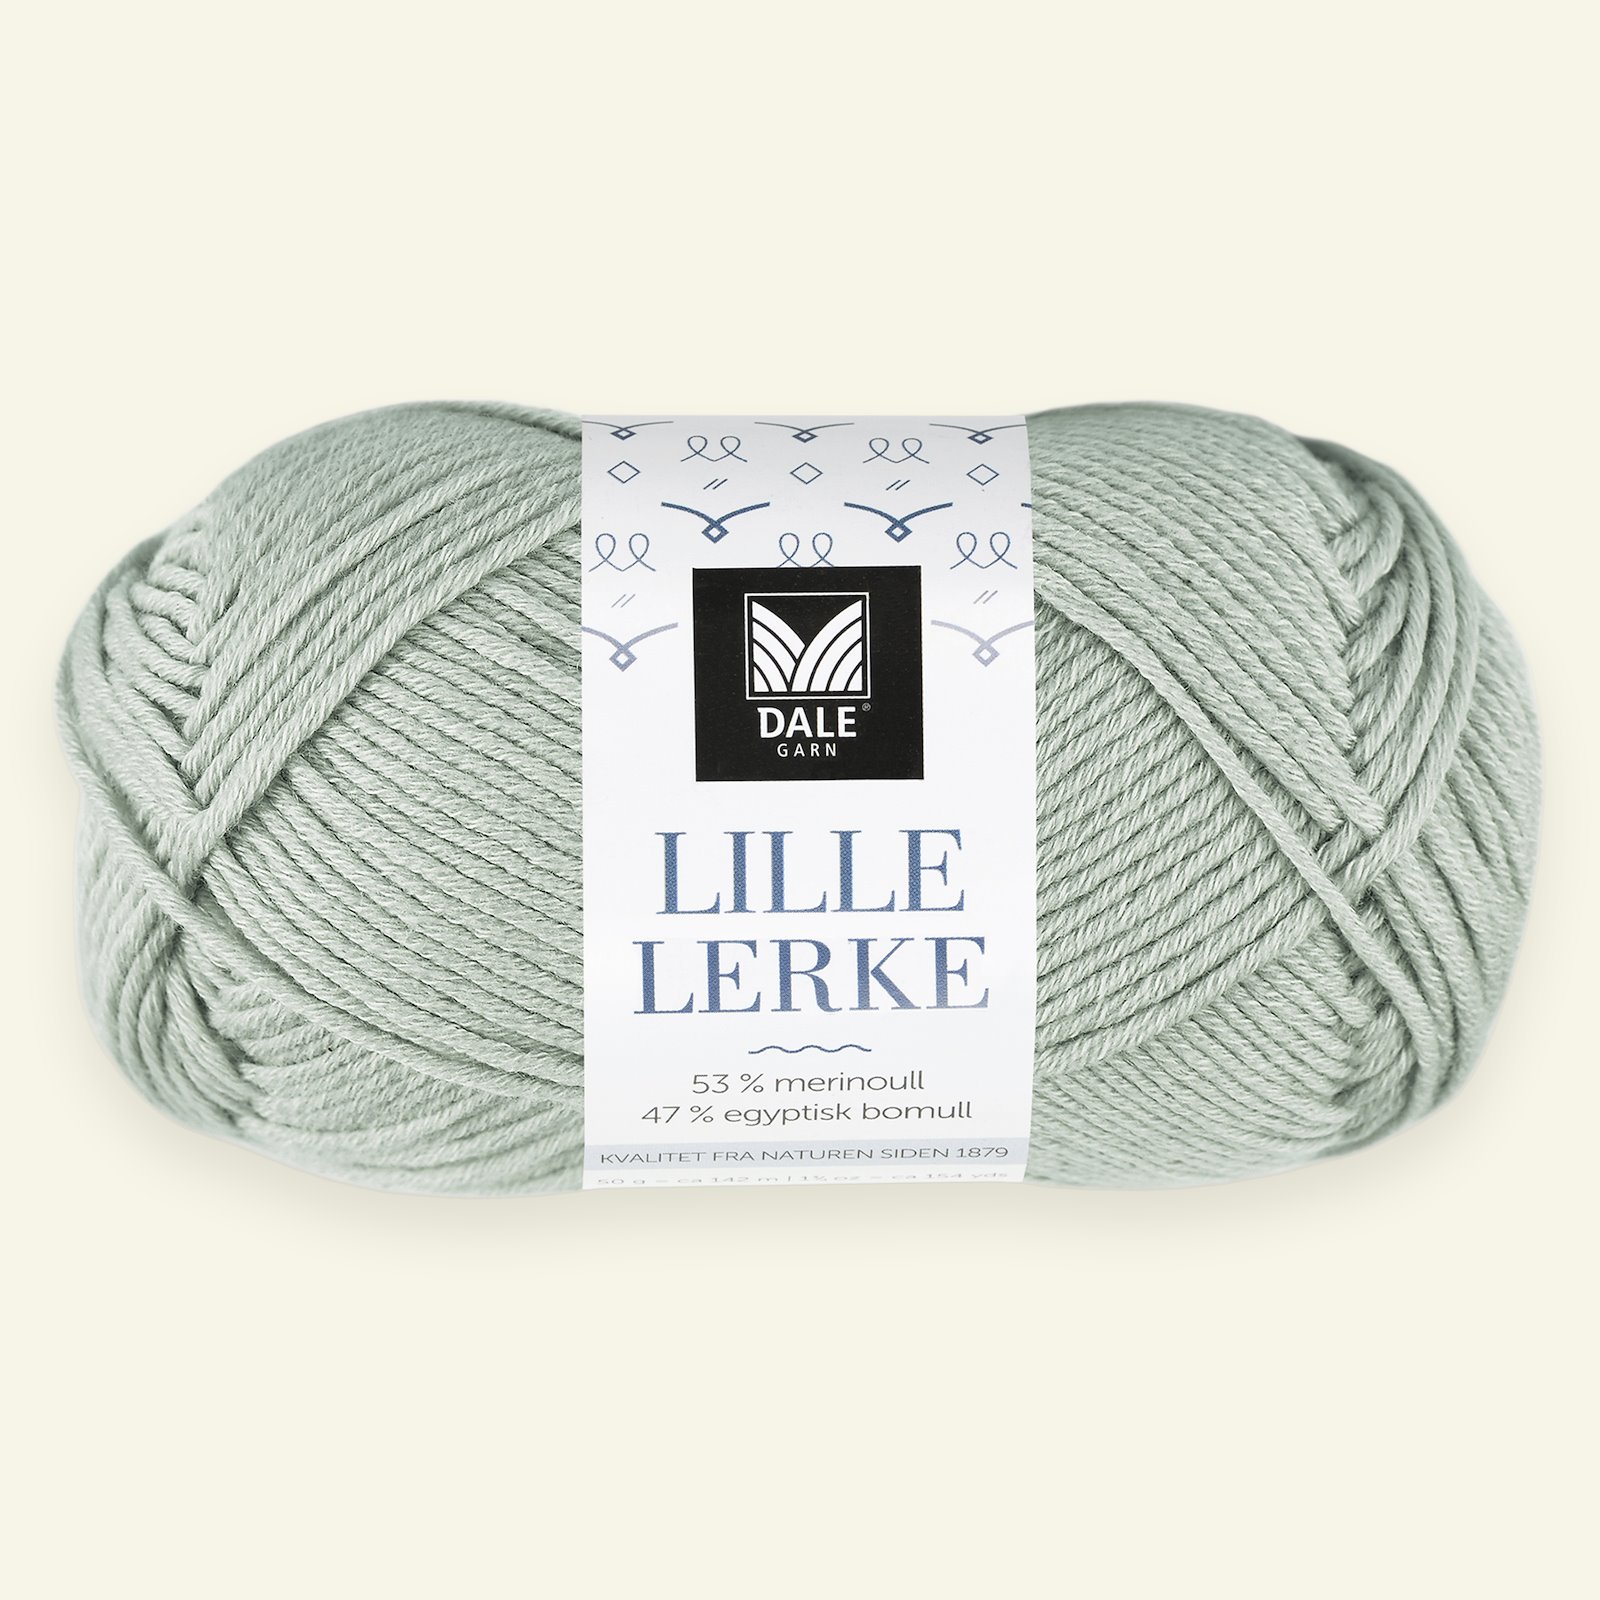 vask udpege tapperhed Dale Garn, merino/cotton yarn "Lille Lerke", light jade green | Selfmade®  /Stoff&Stil